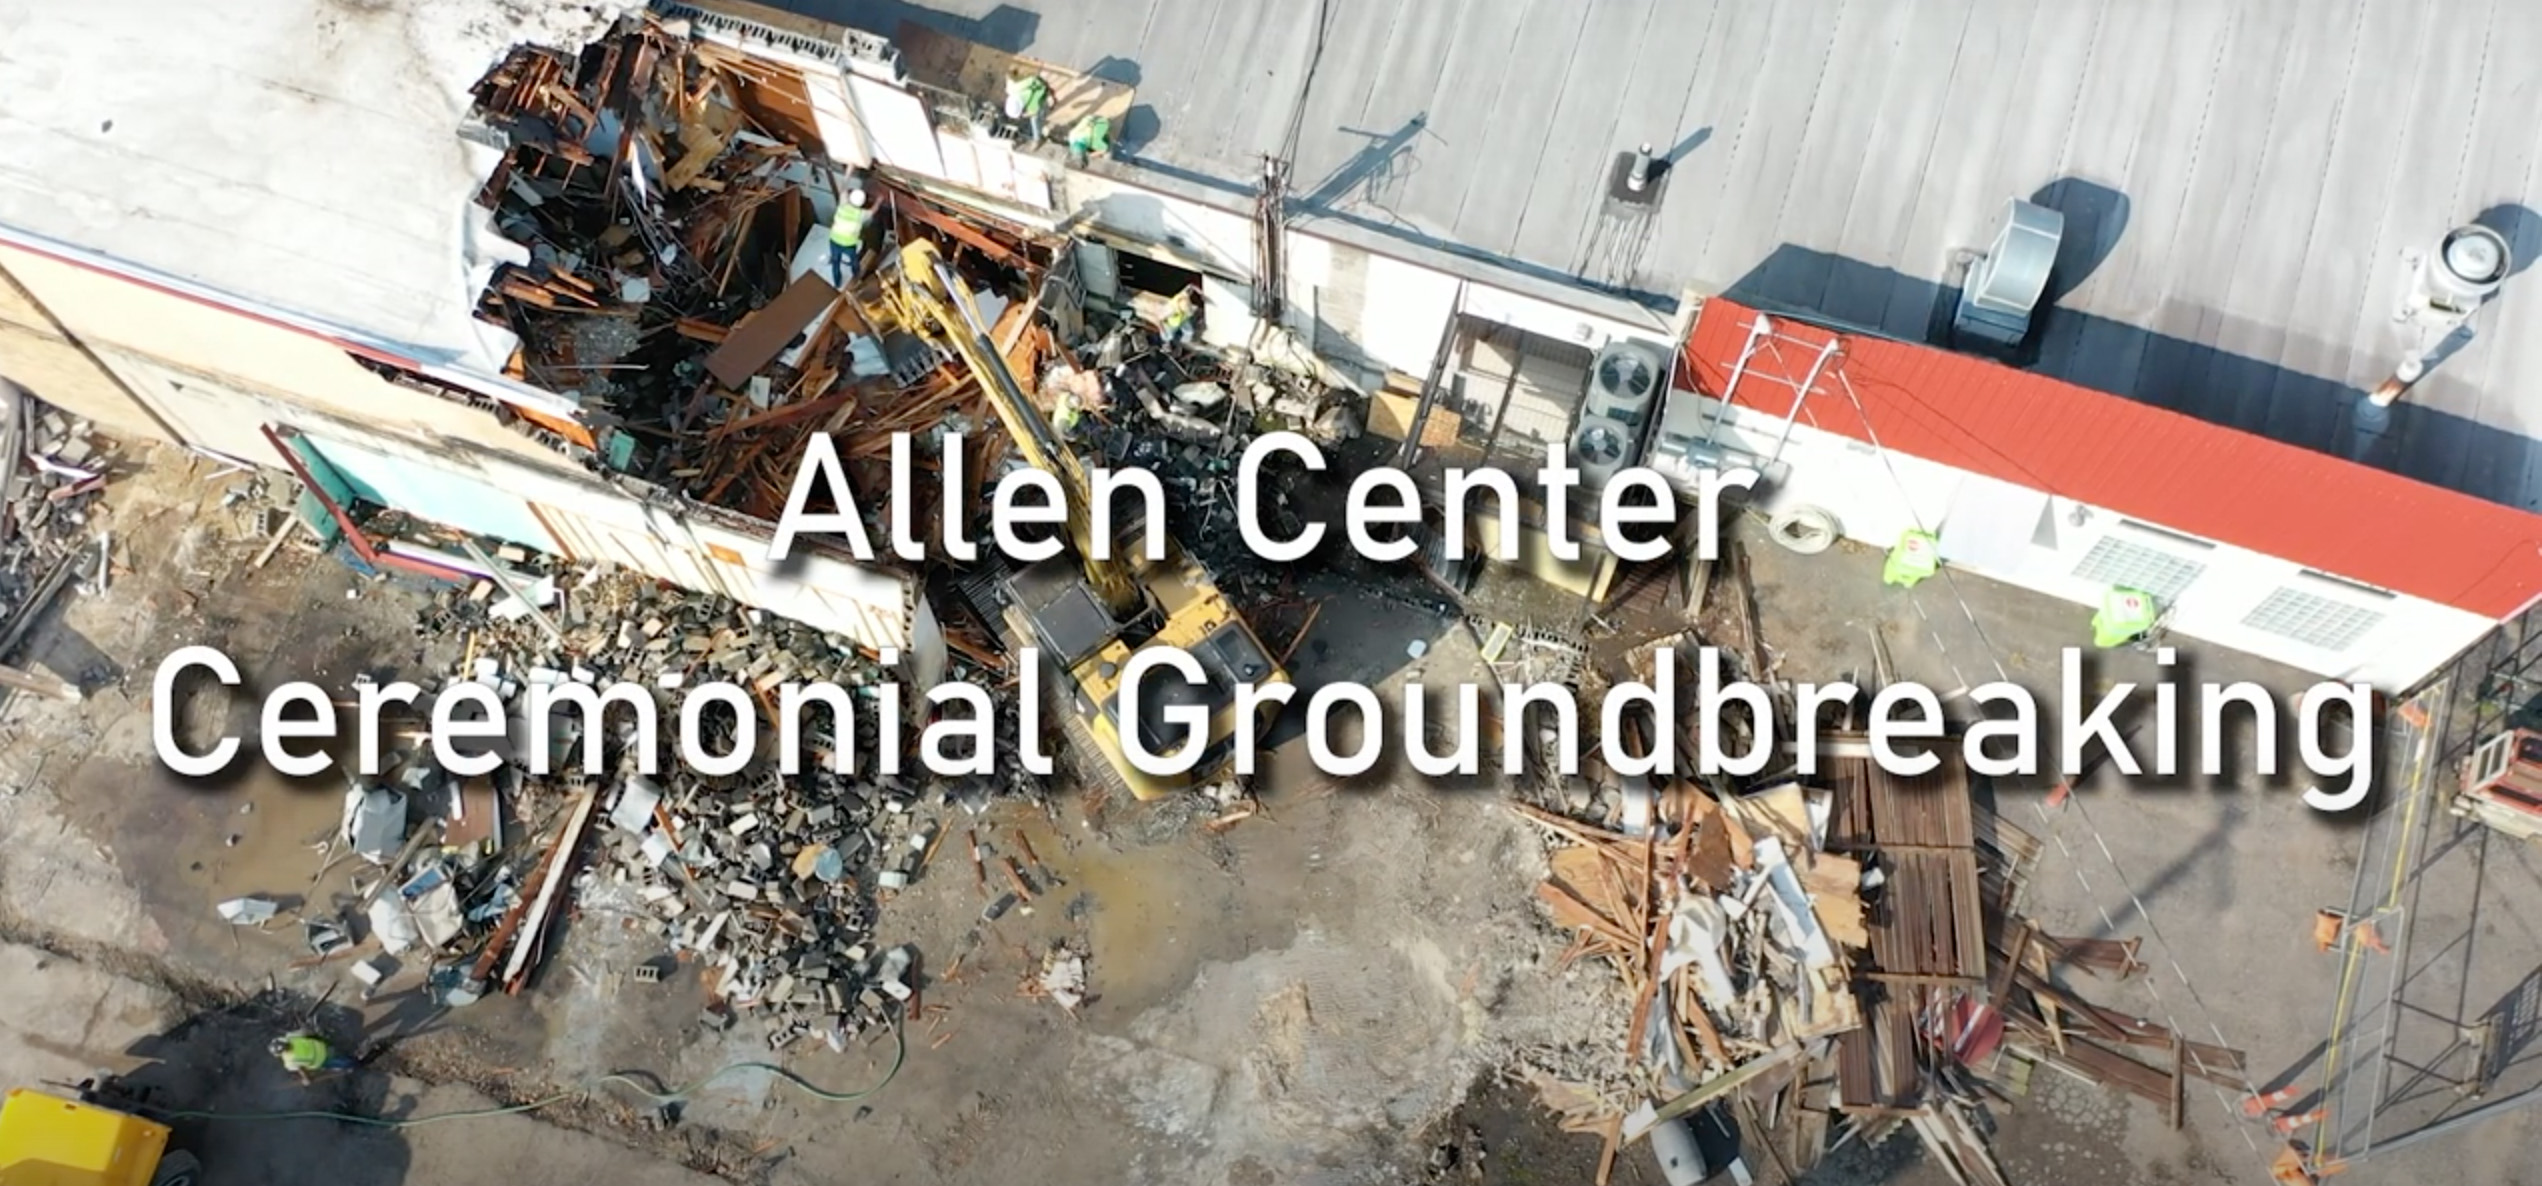 Allen Place Project Partners Celebrate Groundbreaking